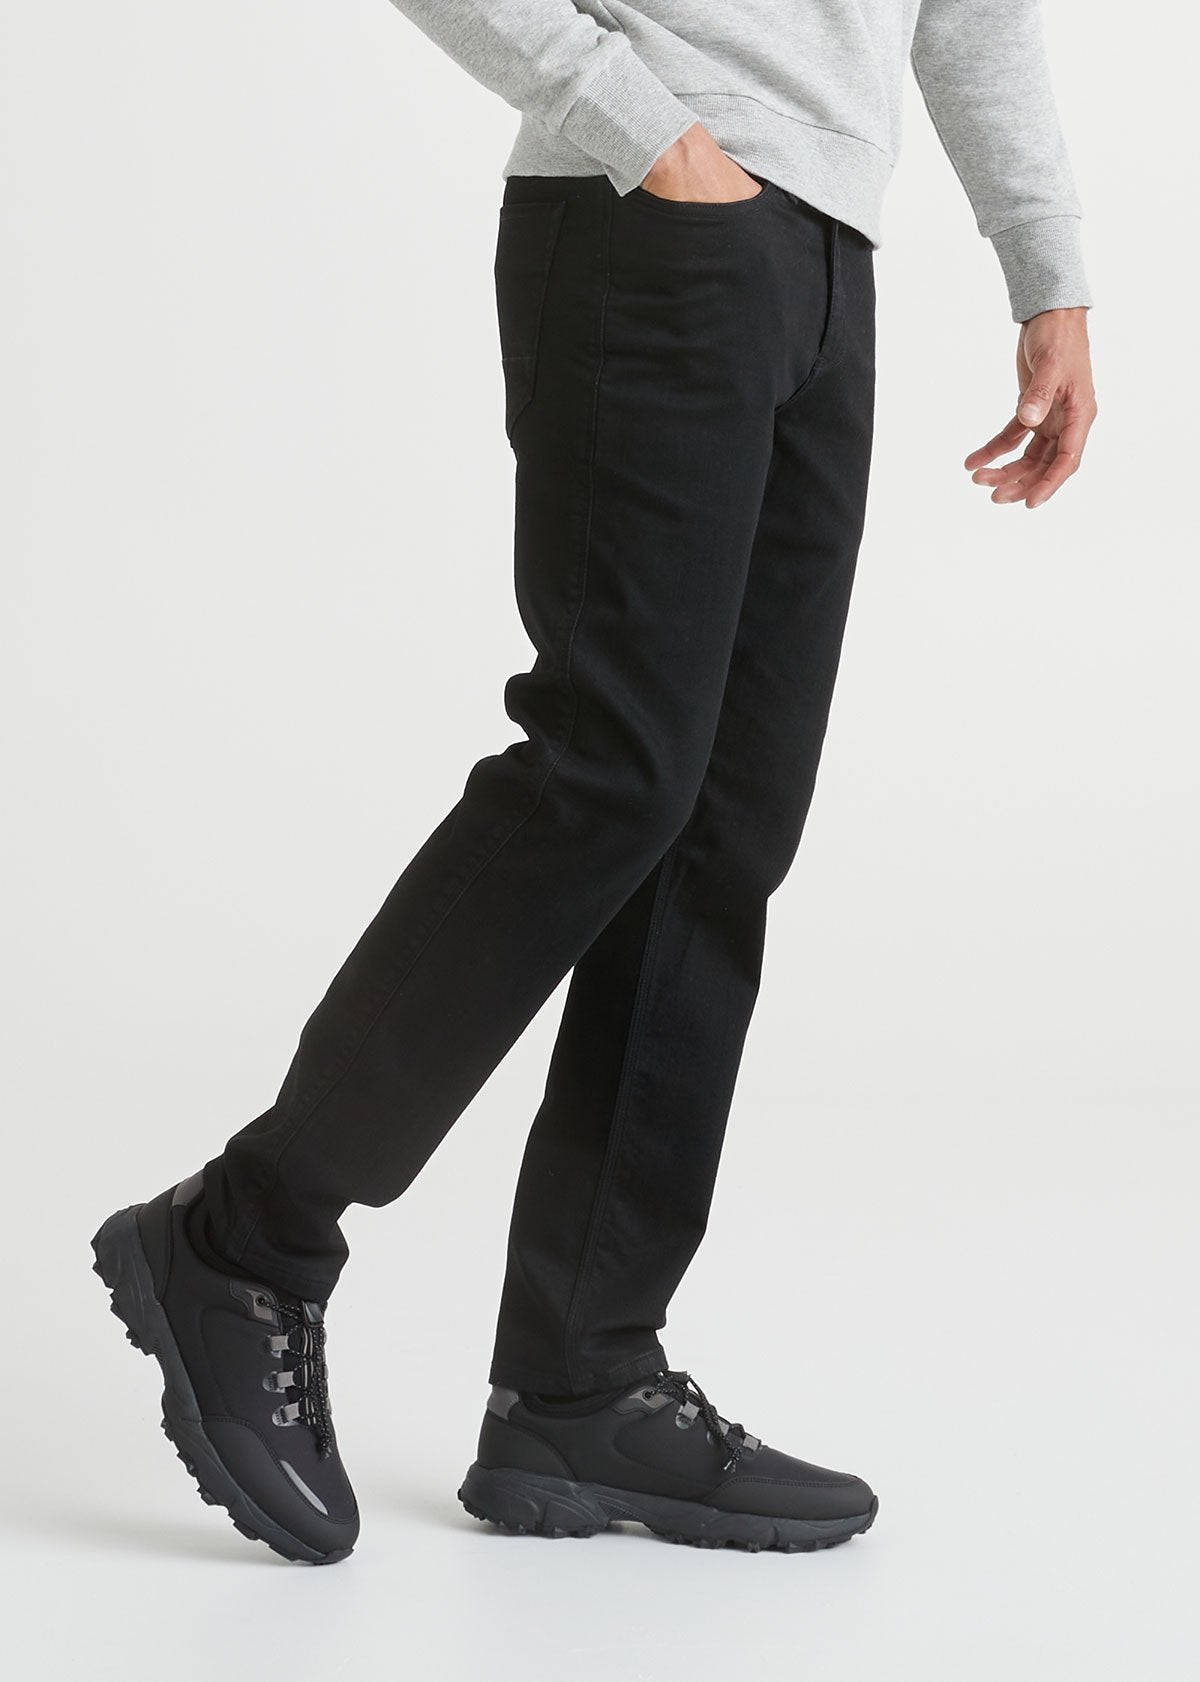 Ultrasoft Slim Comfort Buff Fit Black Jeans - Alva